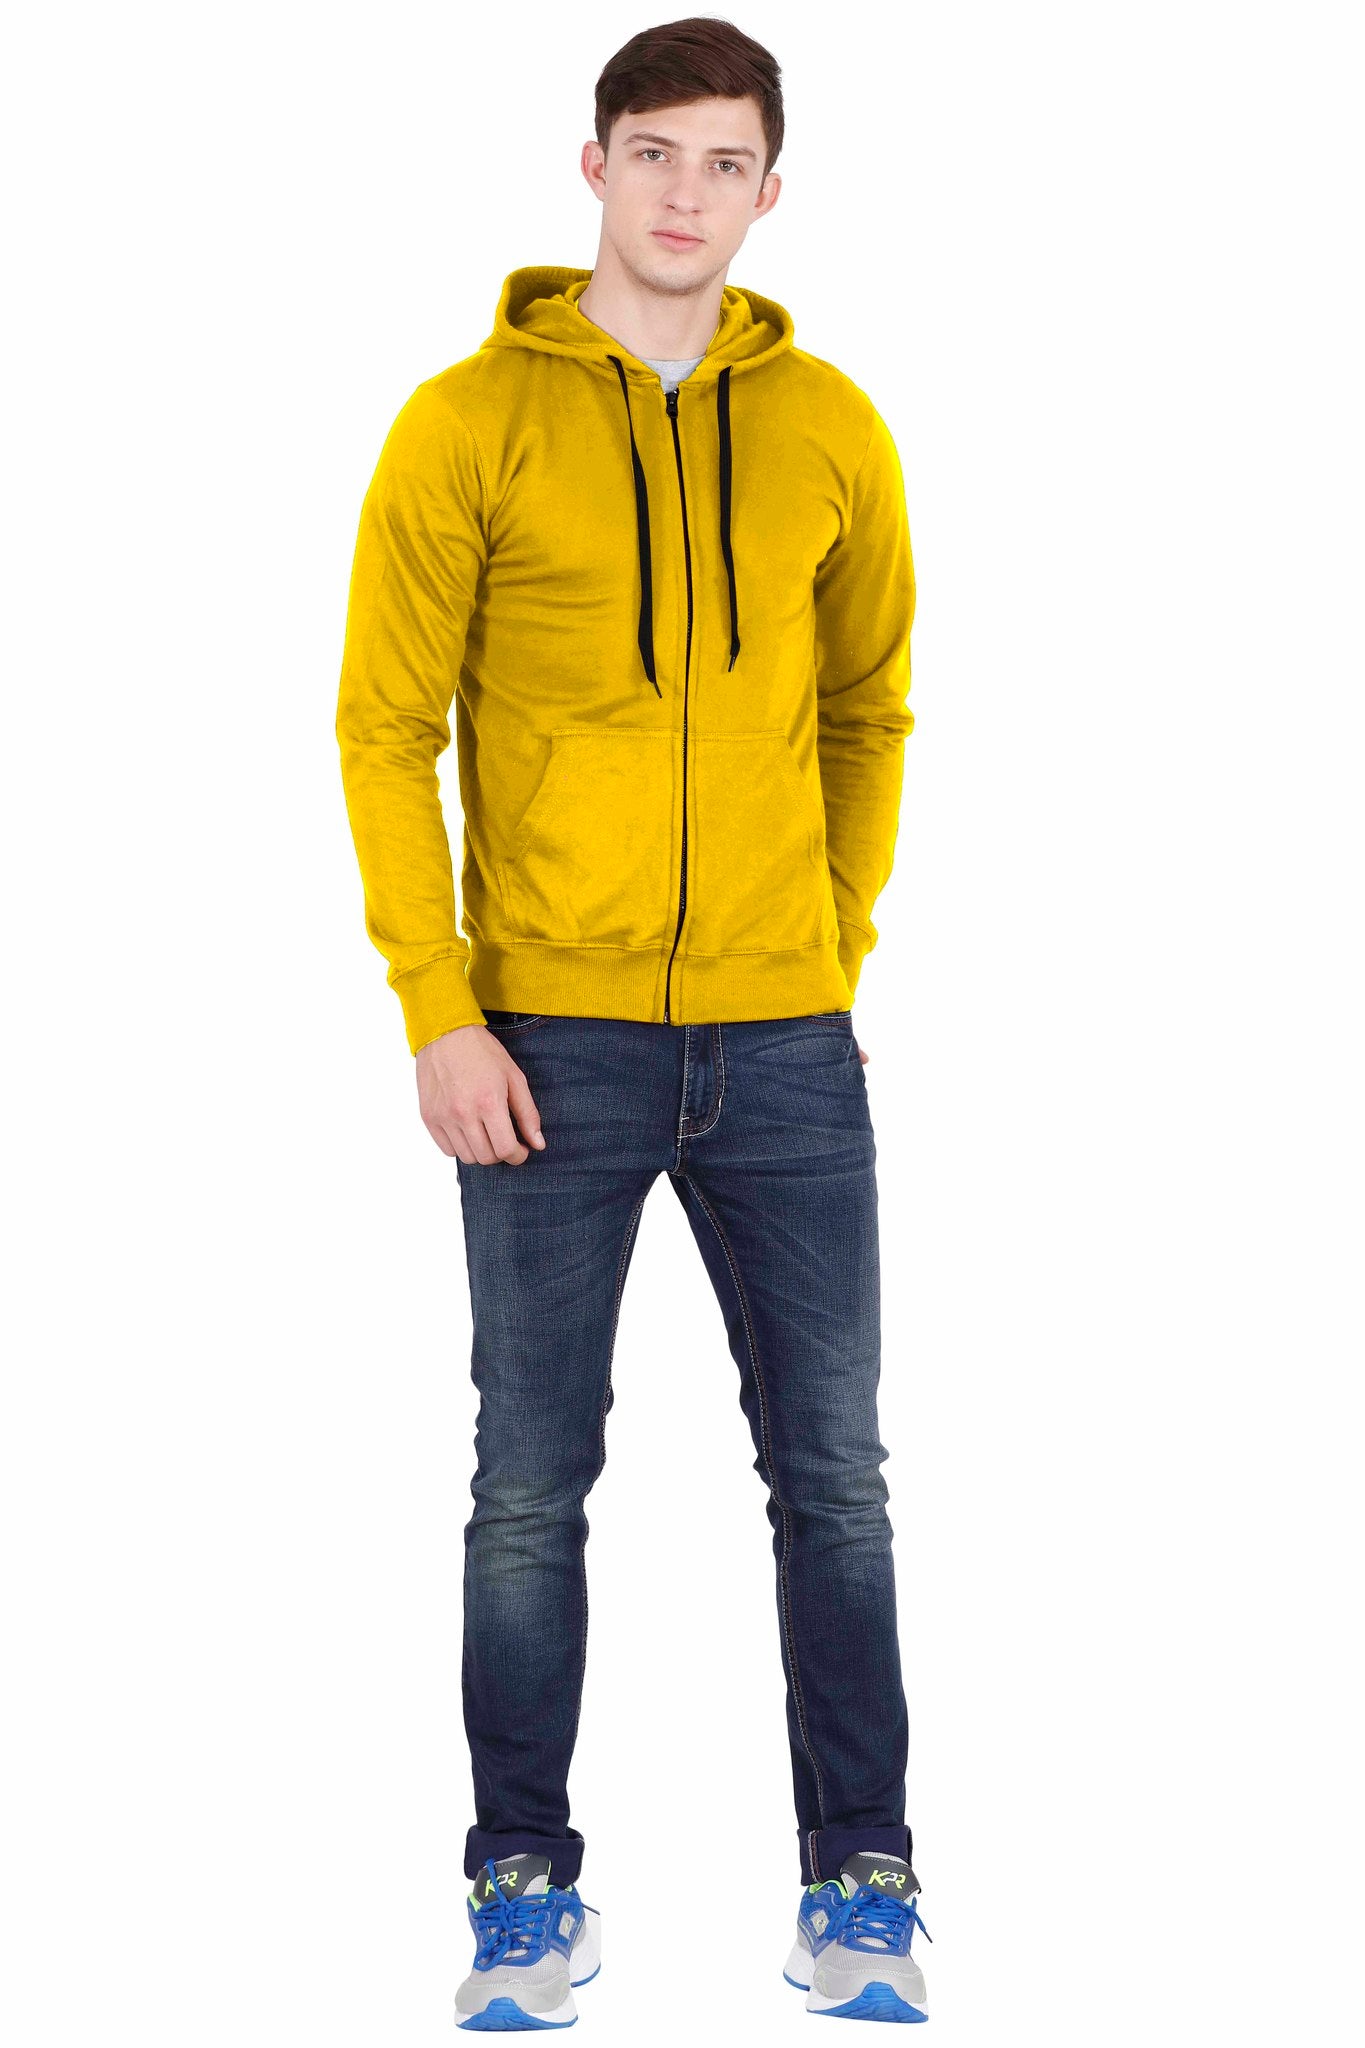 Men's Cotton Plain Full Sleeve Mustard Yellow Color Sweatshirt/Hoodies